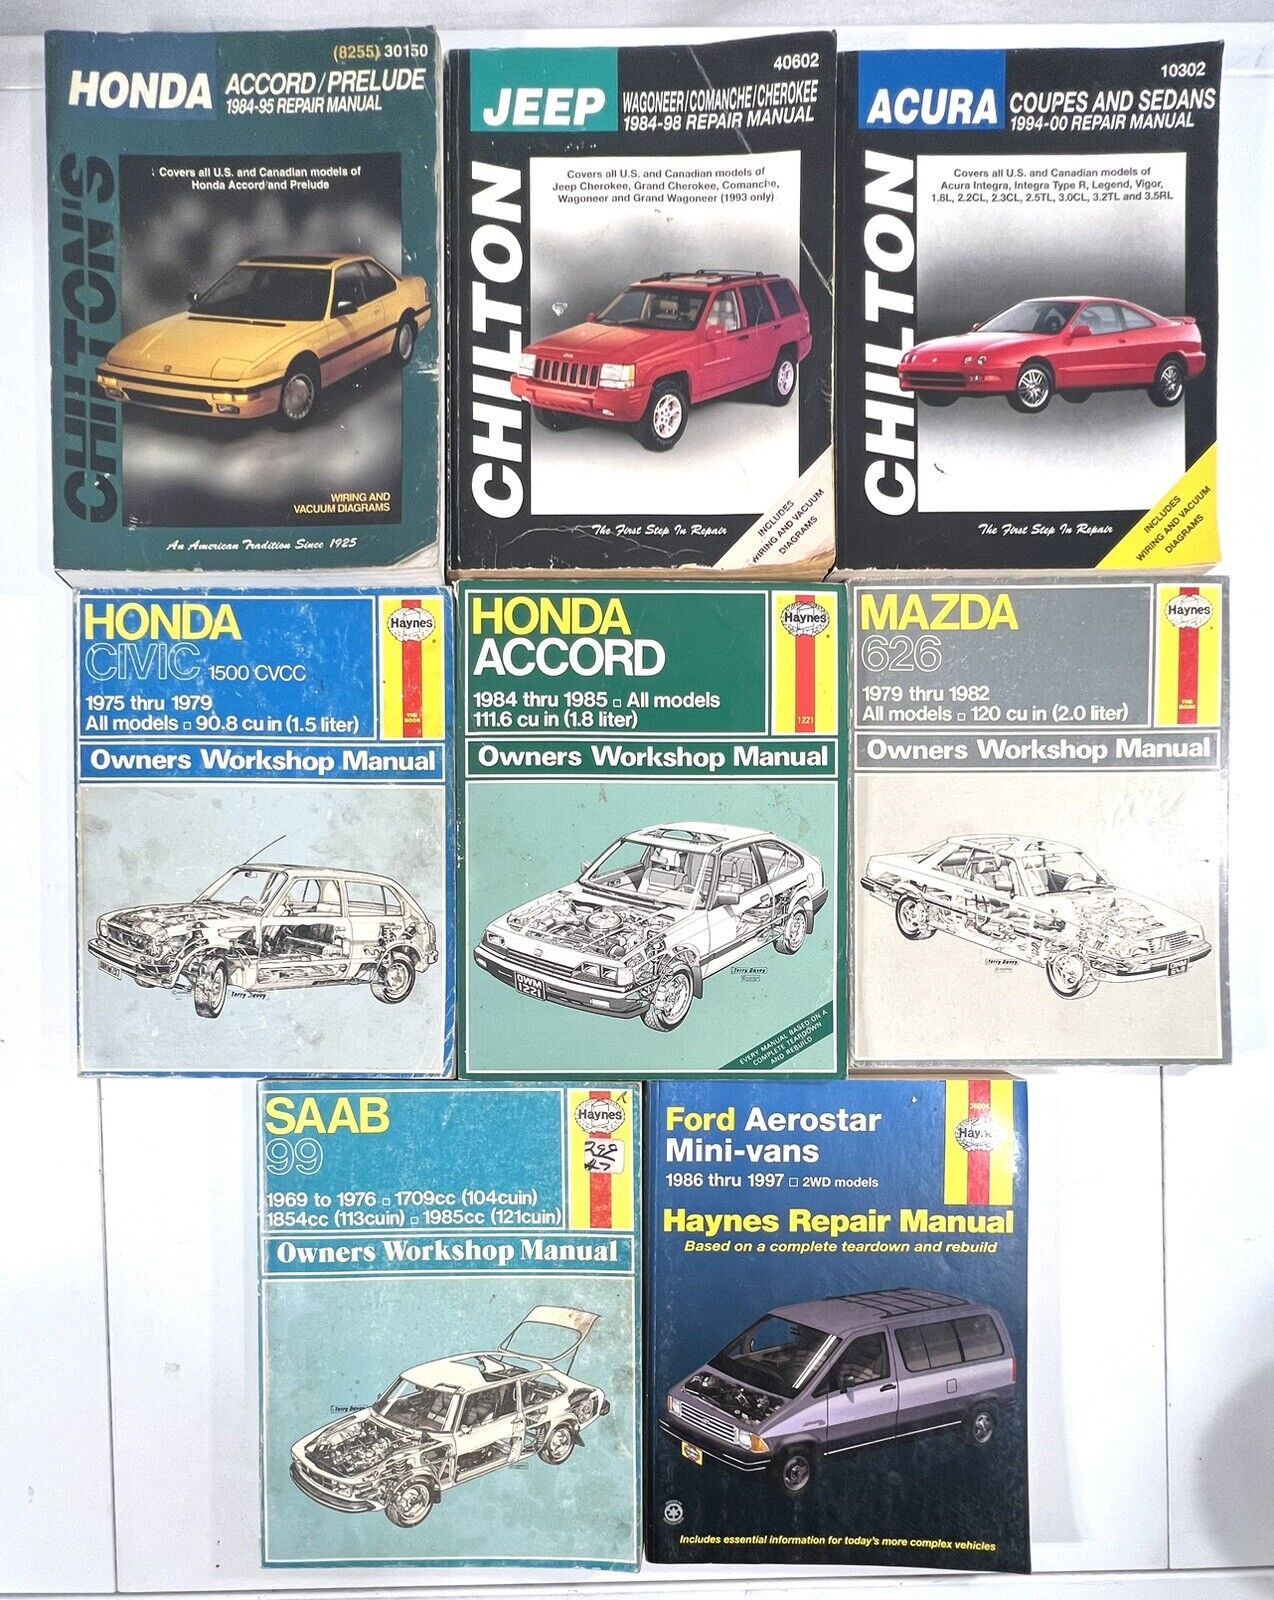 Vintage Chilton/Haynes Repair Manual Lot Of 8, Honda Saab Ford Acura Keep Mazda